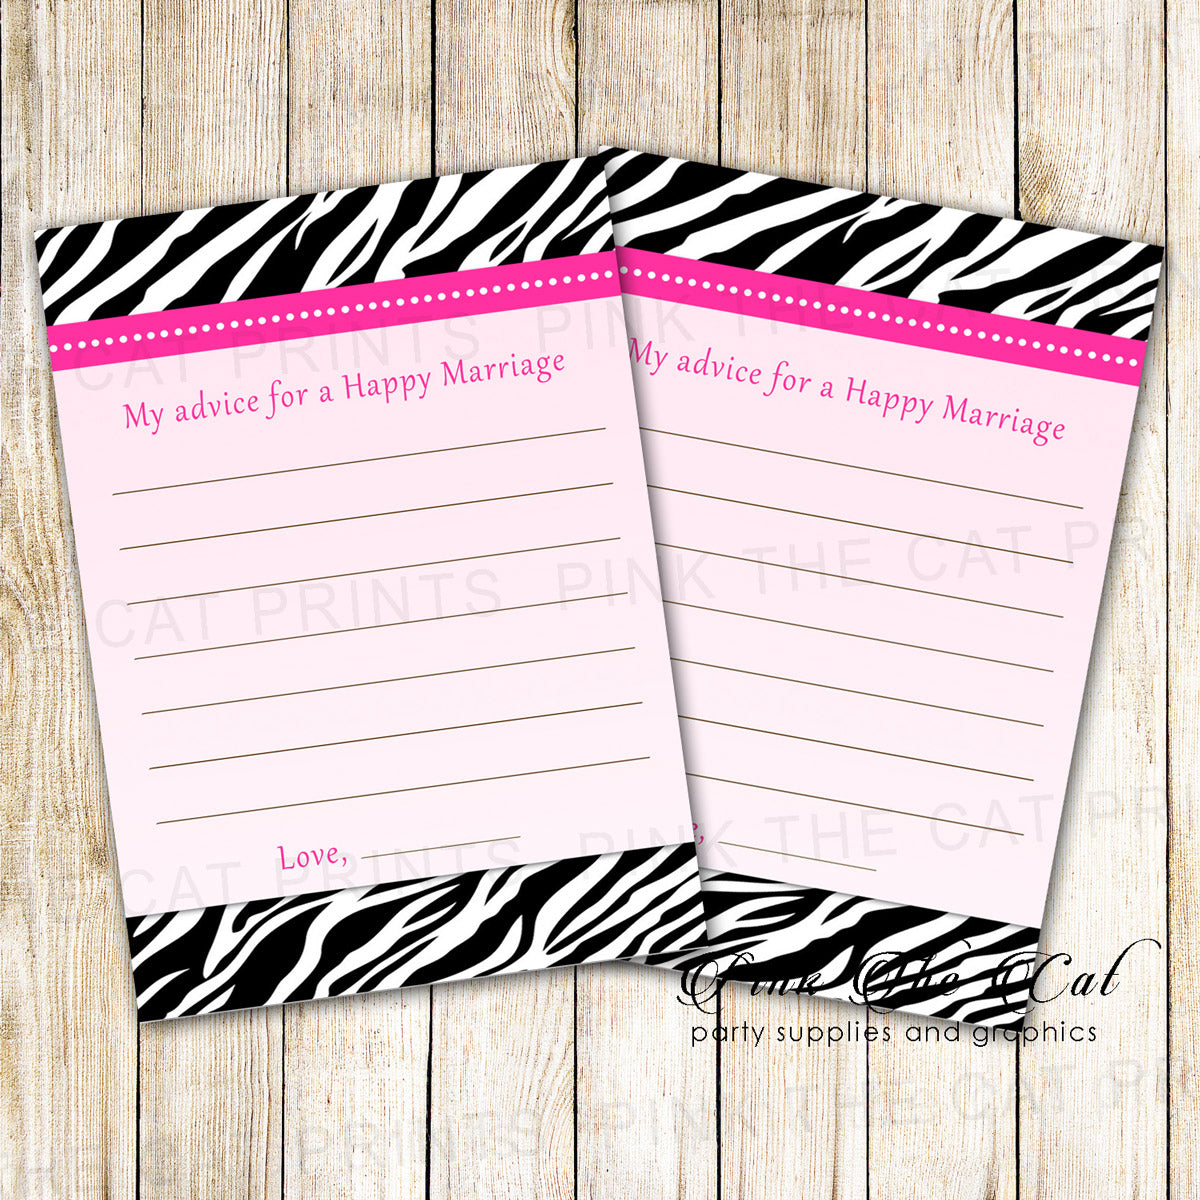 30 Bridal shower wedding advice cards pink black zebra